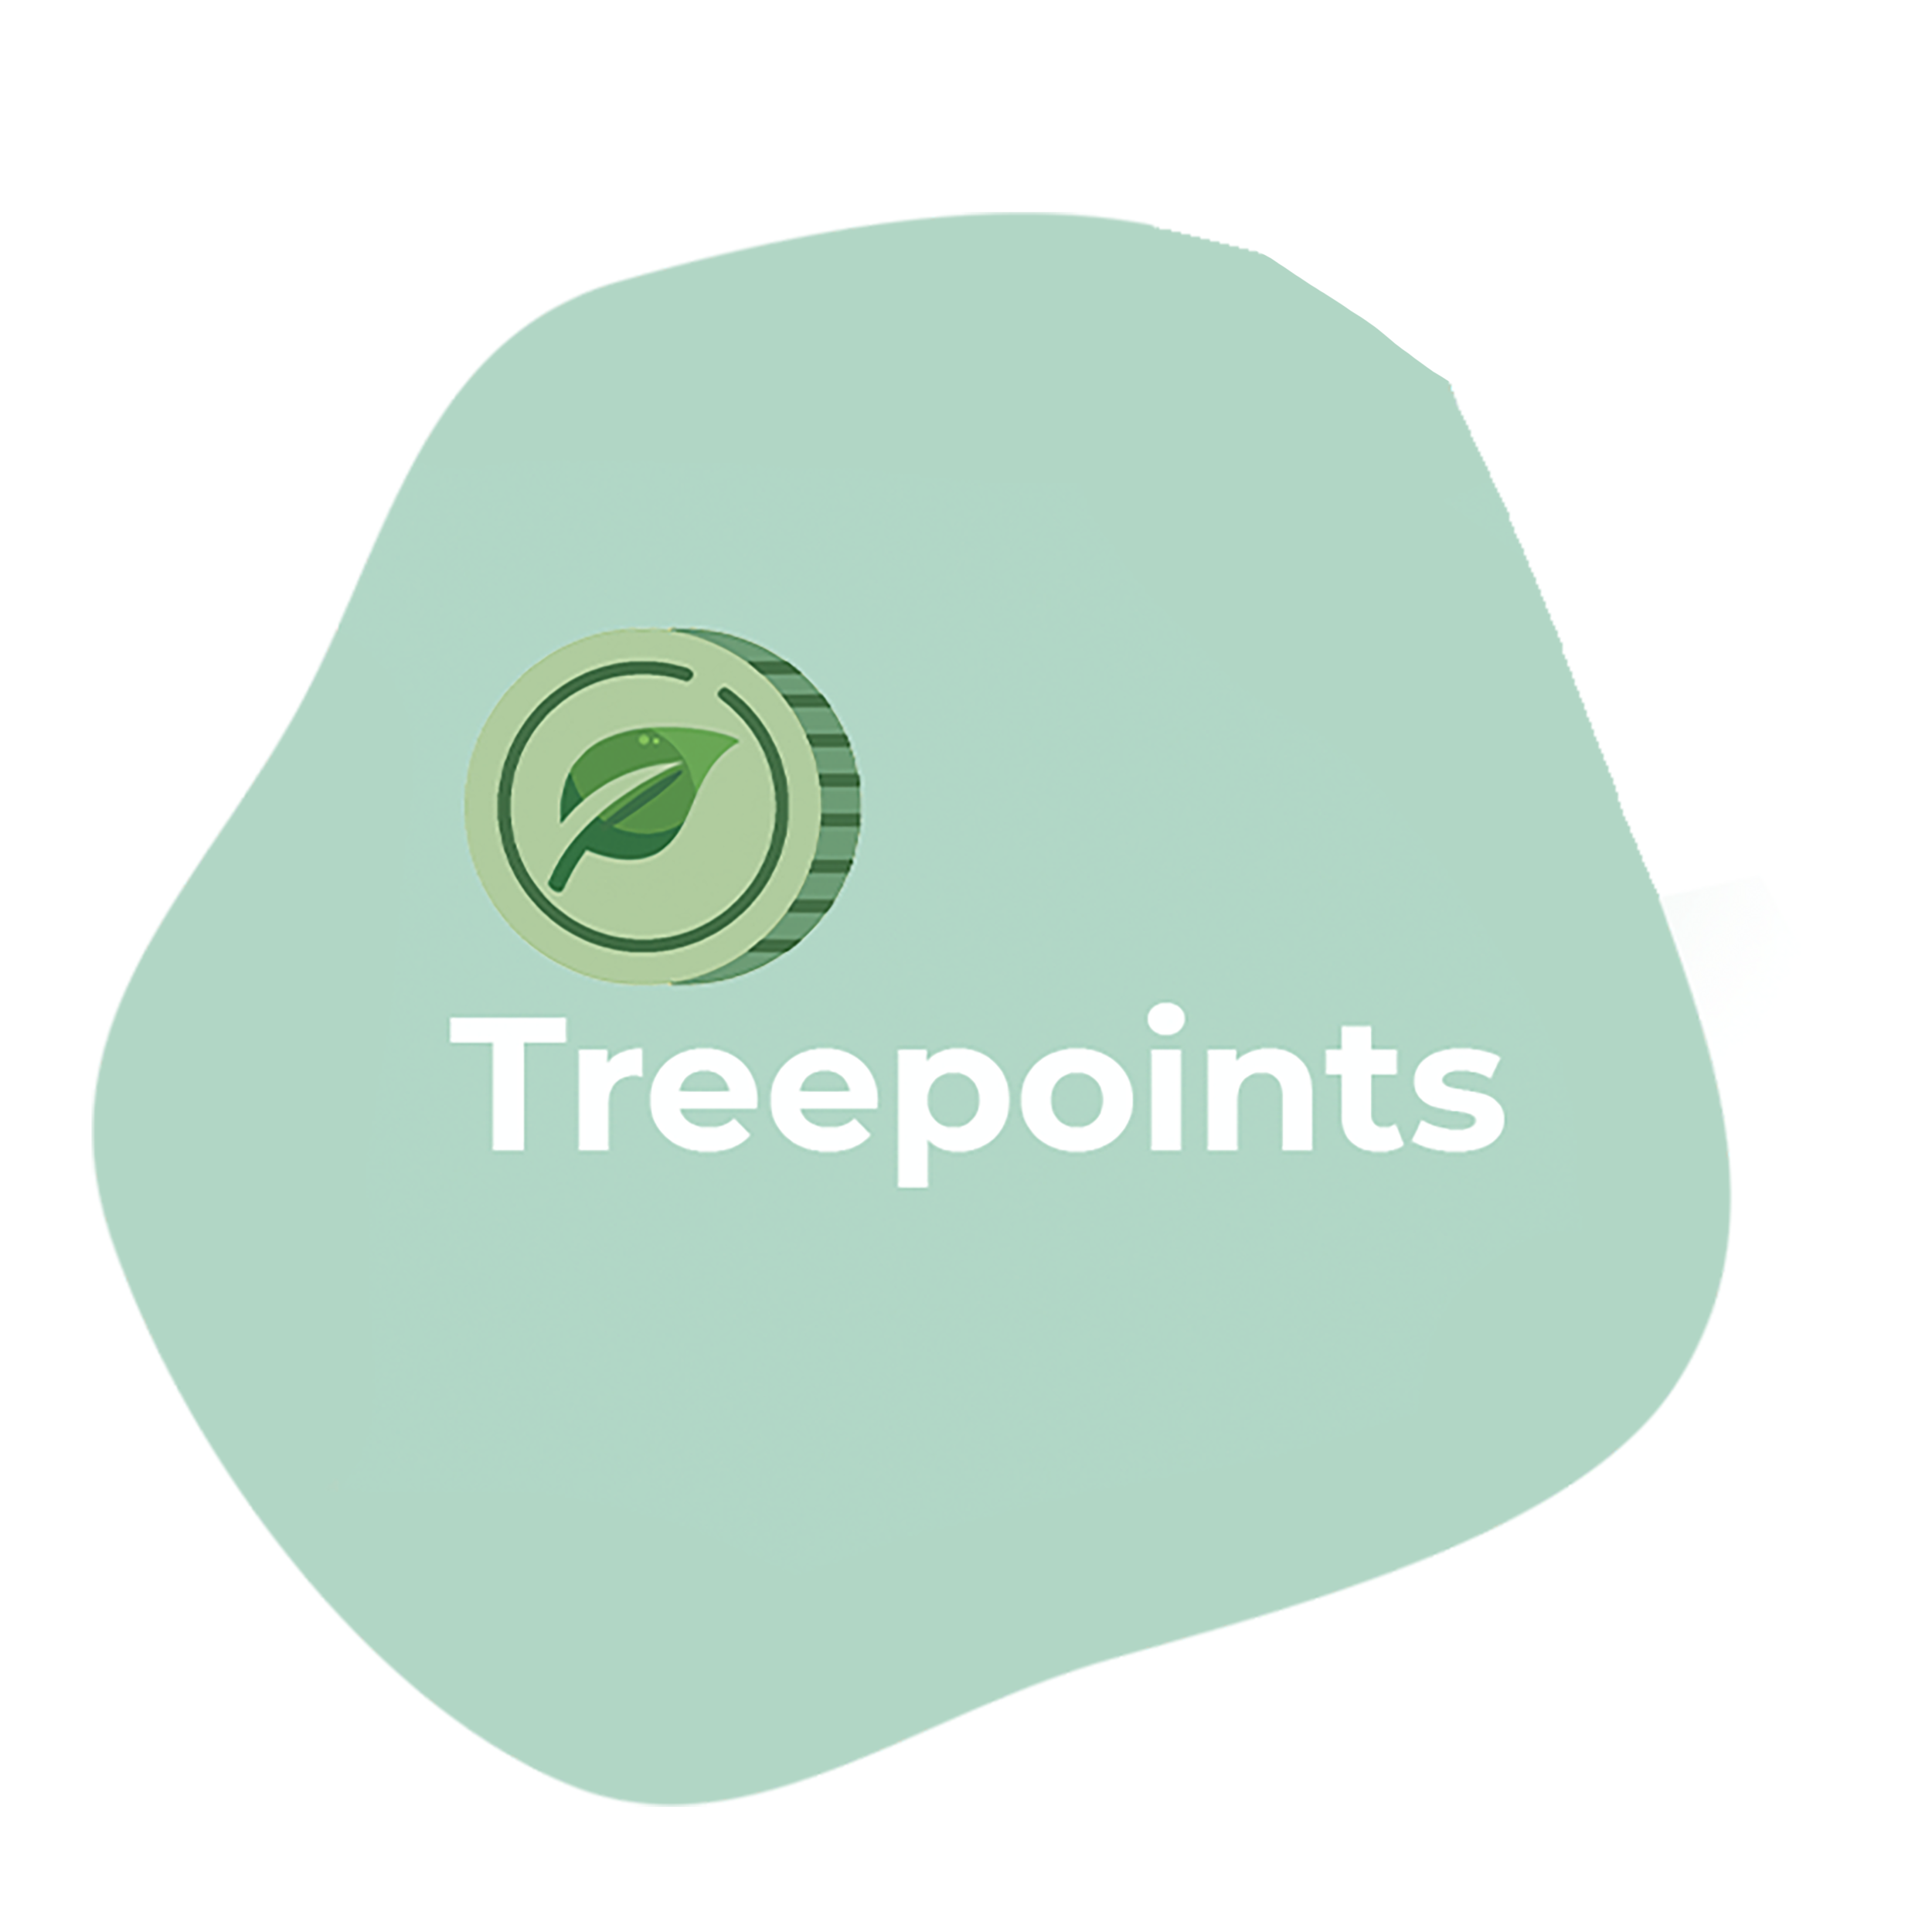 TreepointsLogo.png